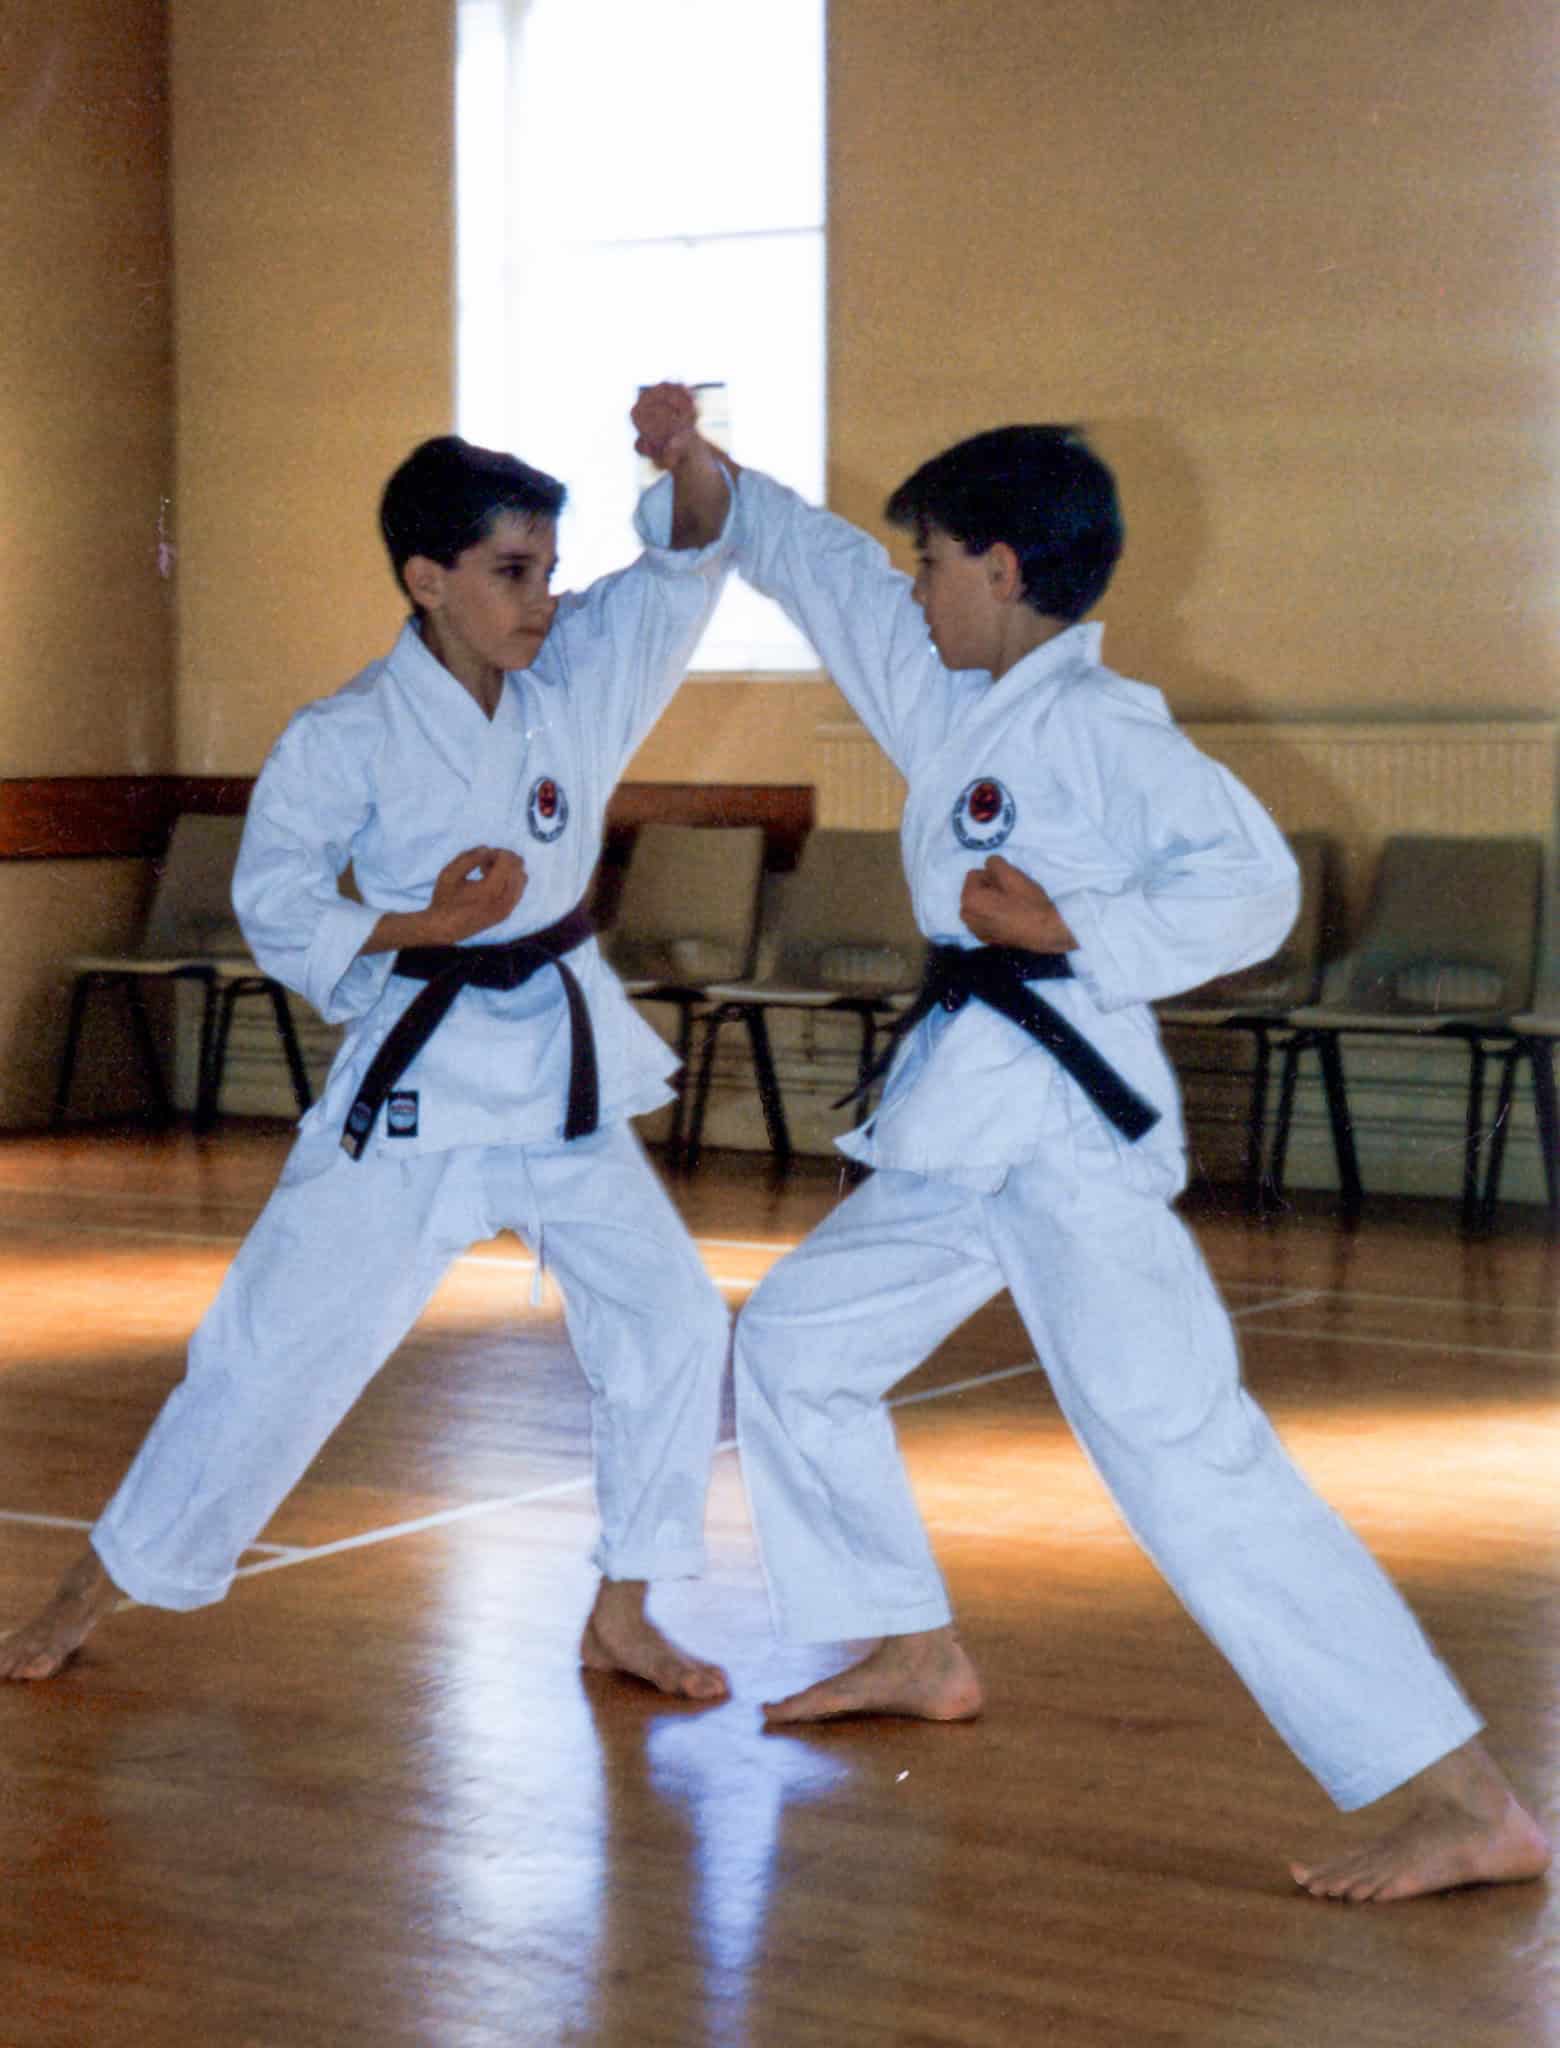 drew and jonathan scott doing karate as kids